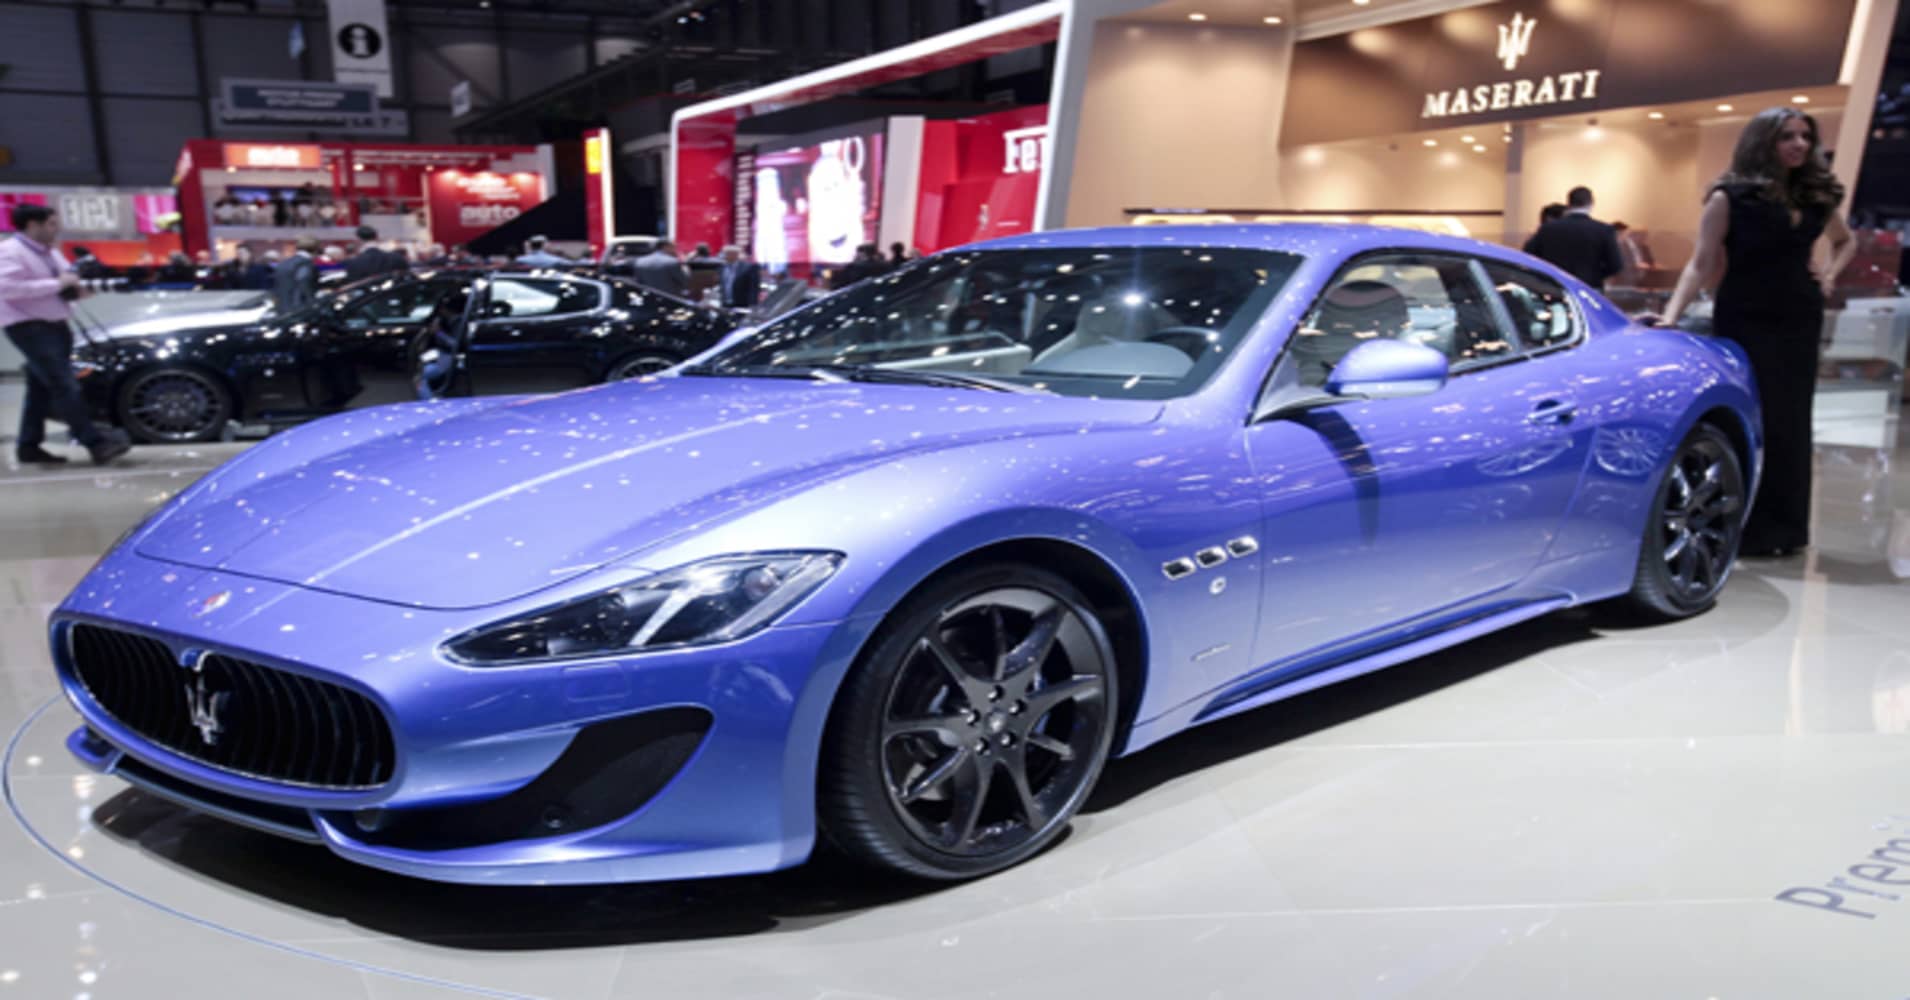 Fiat to Invest $1.6 Billion in New Maserati Models